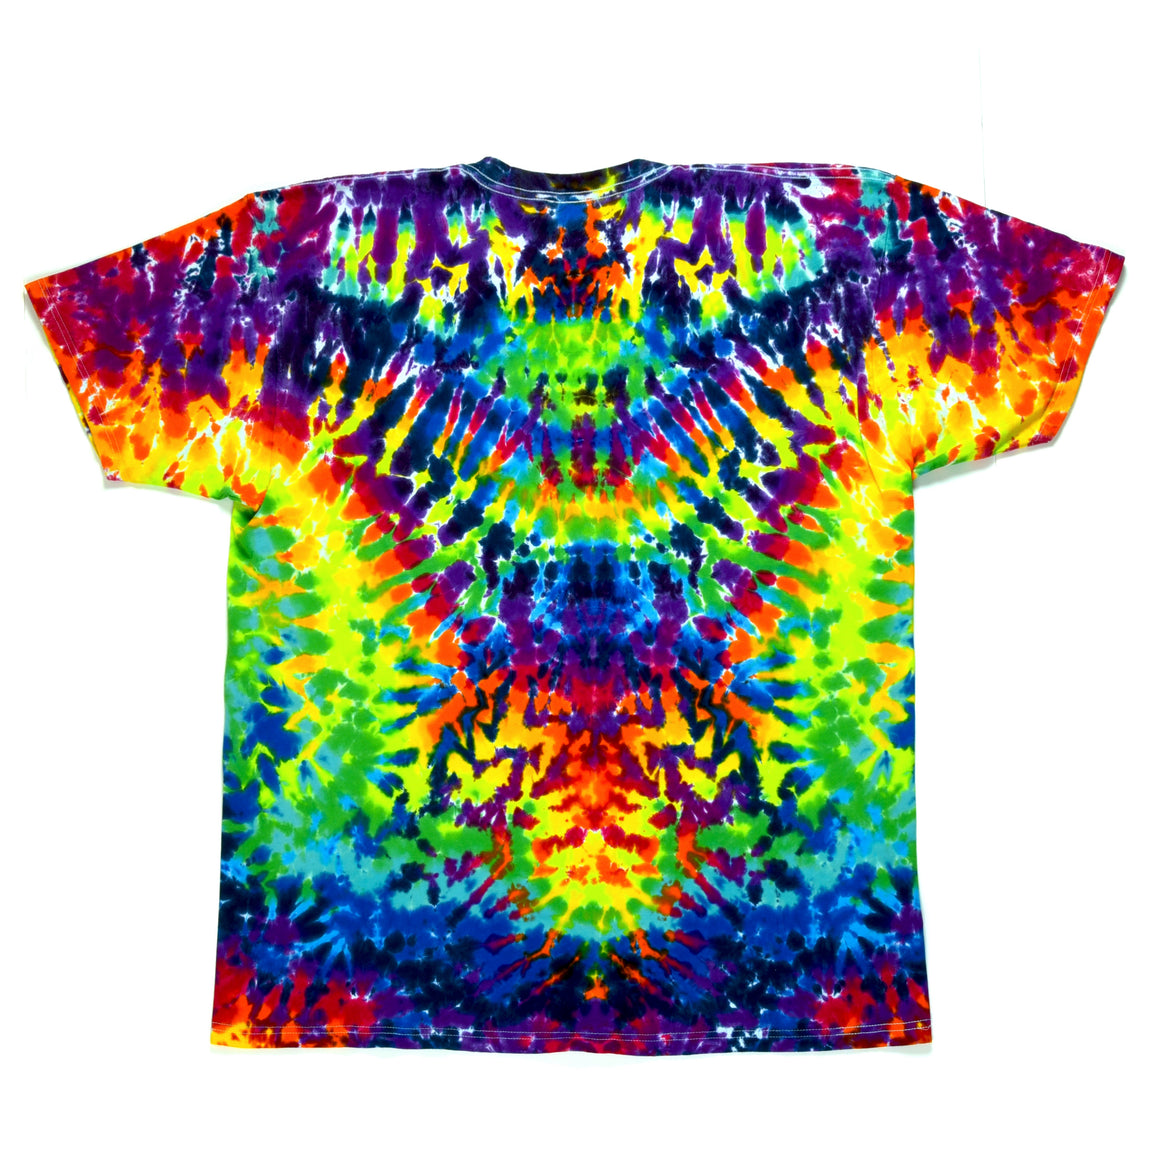 XXL Tie Dye T-Shirt - "Entity"